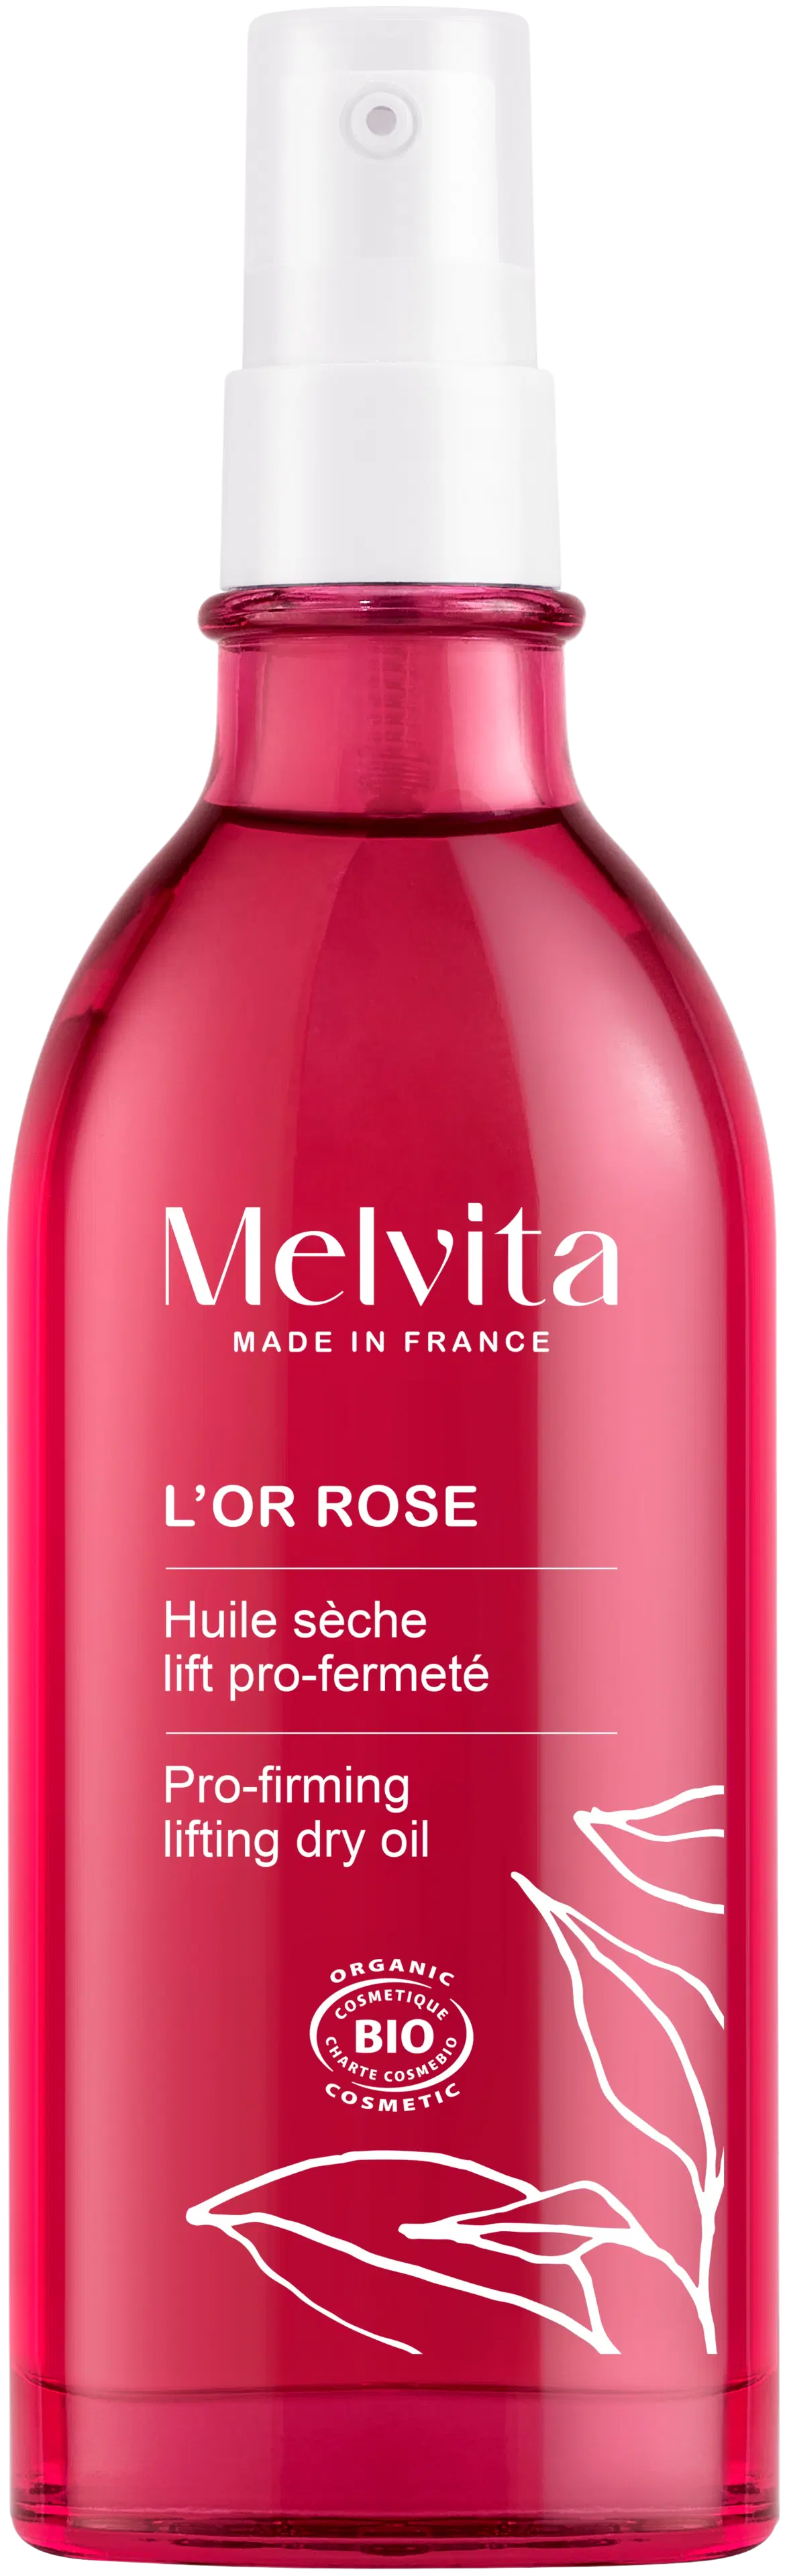 Melvita L'Or Rose Pro-firming lifting dry oil vartaloöljy 100 ml